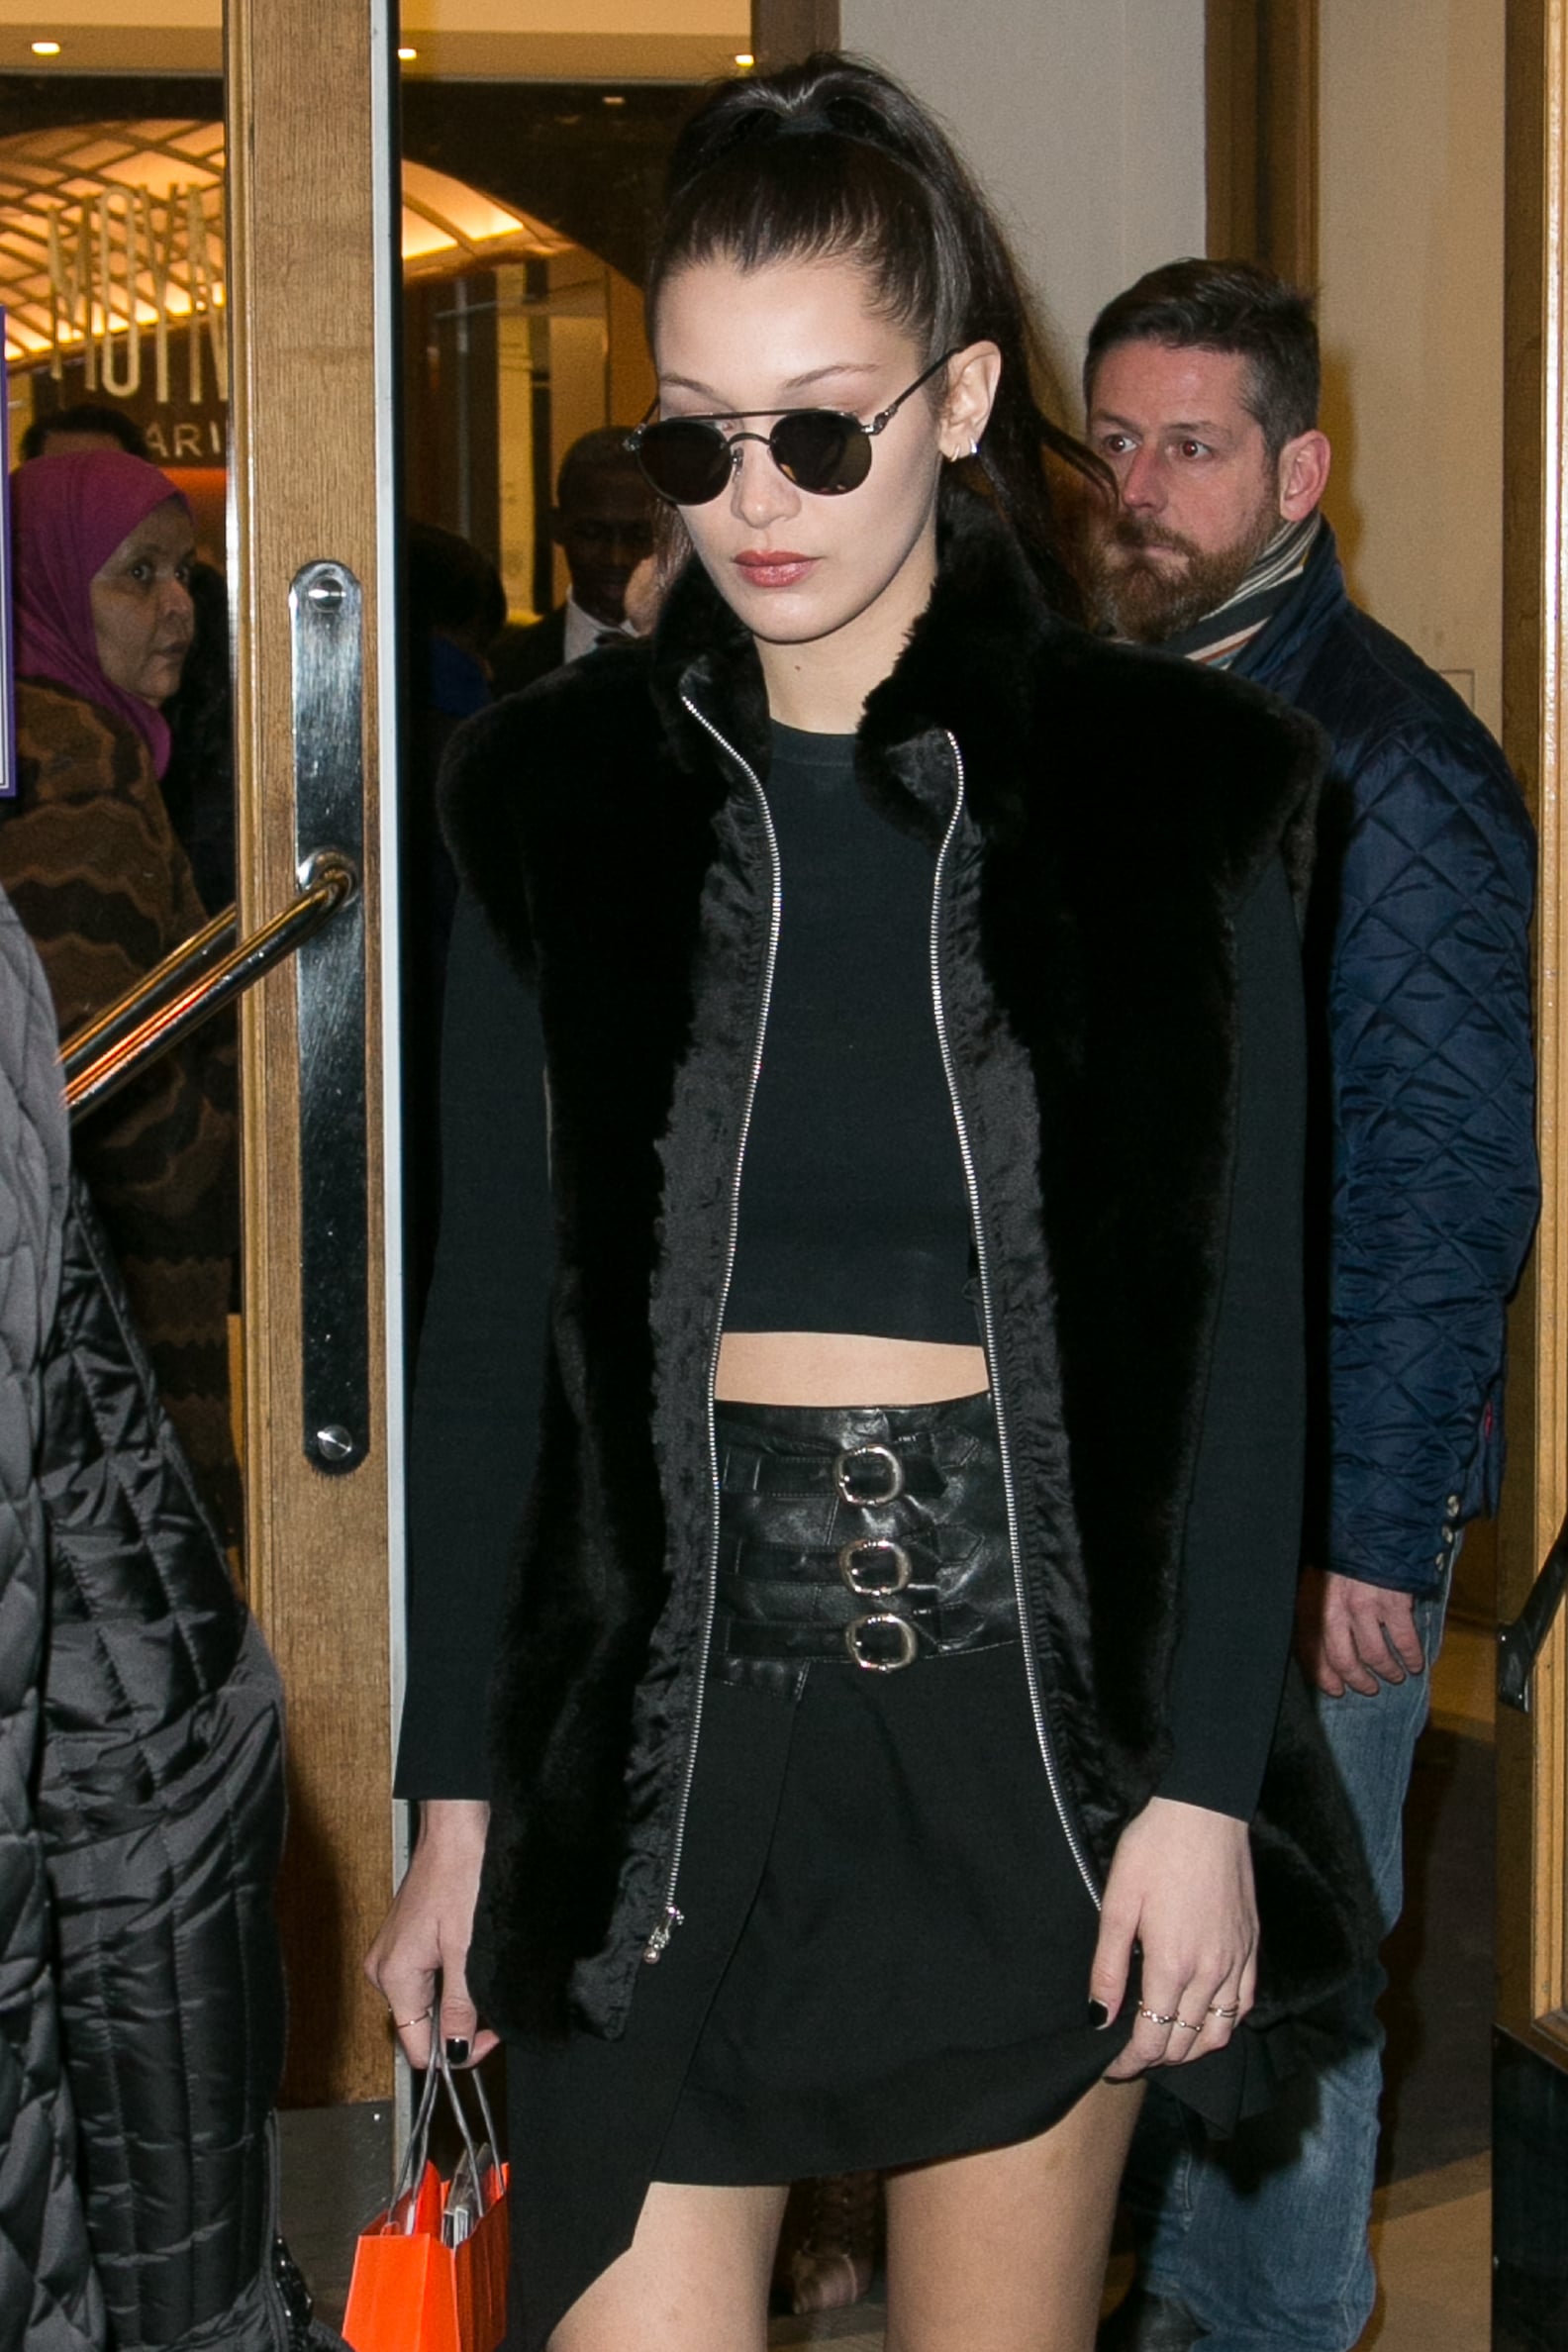 Gigi Hadid Wearing Furry Coat in Paris | POPSUGAR Fashion